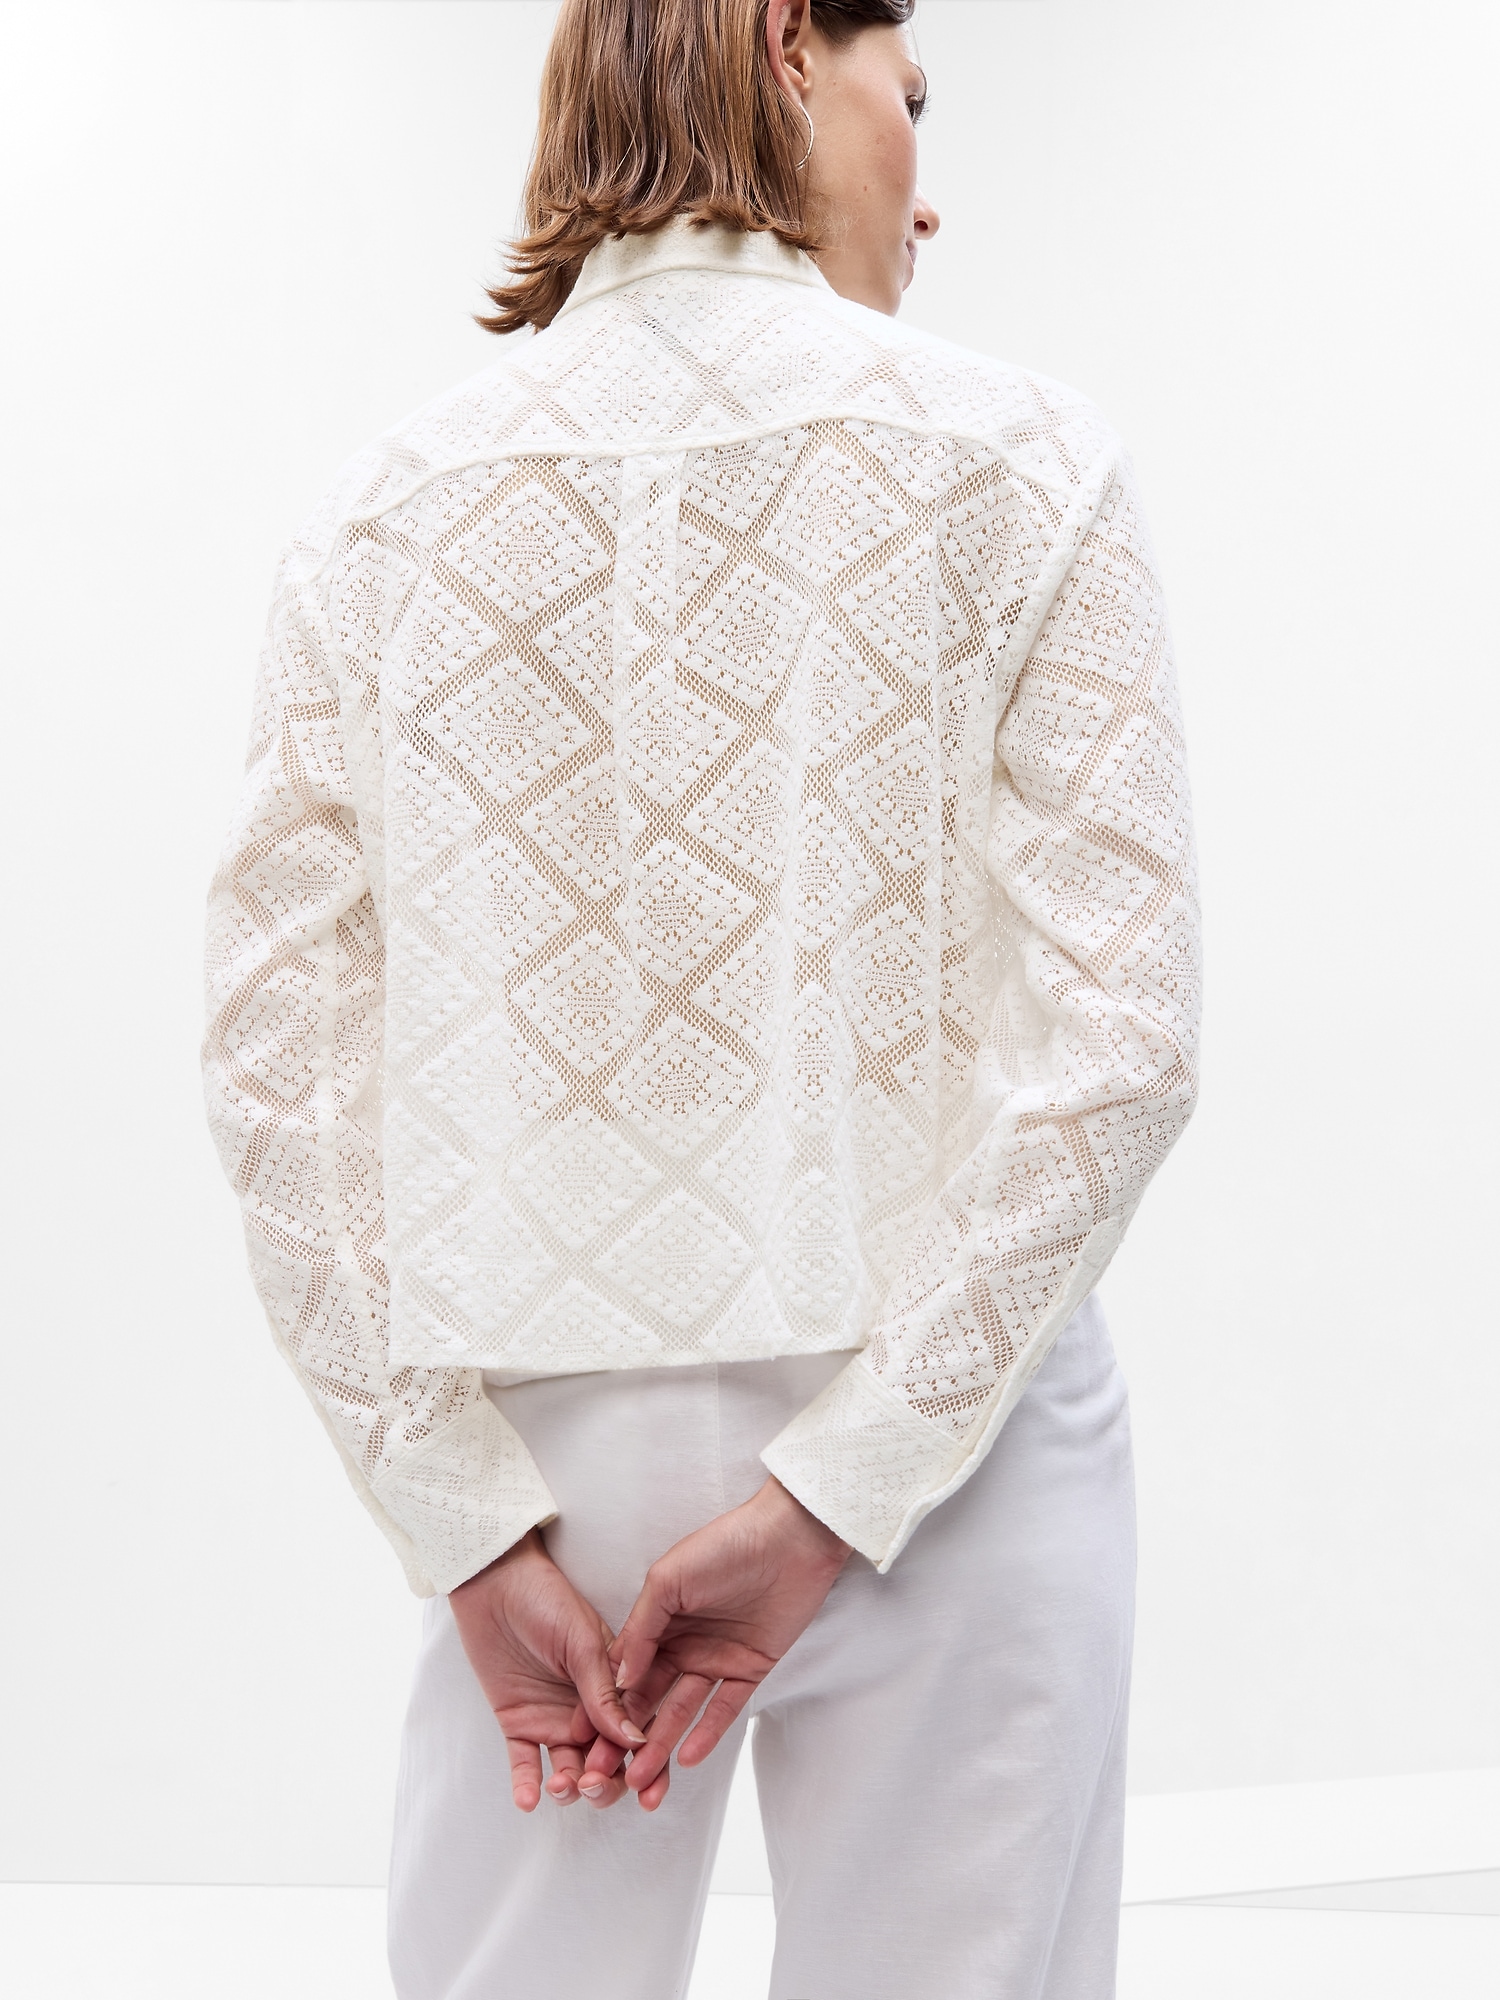 Cropped Crochet Shirt | Gap